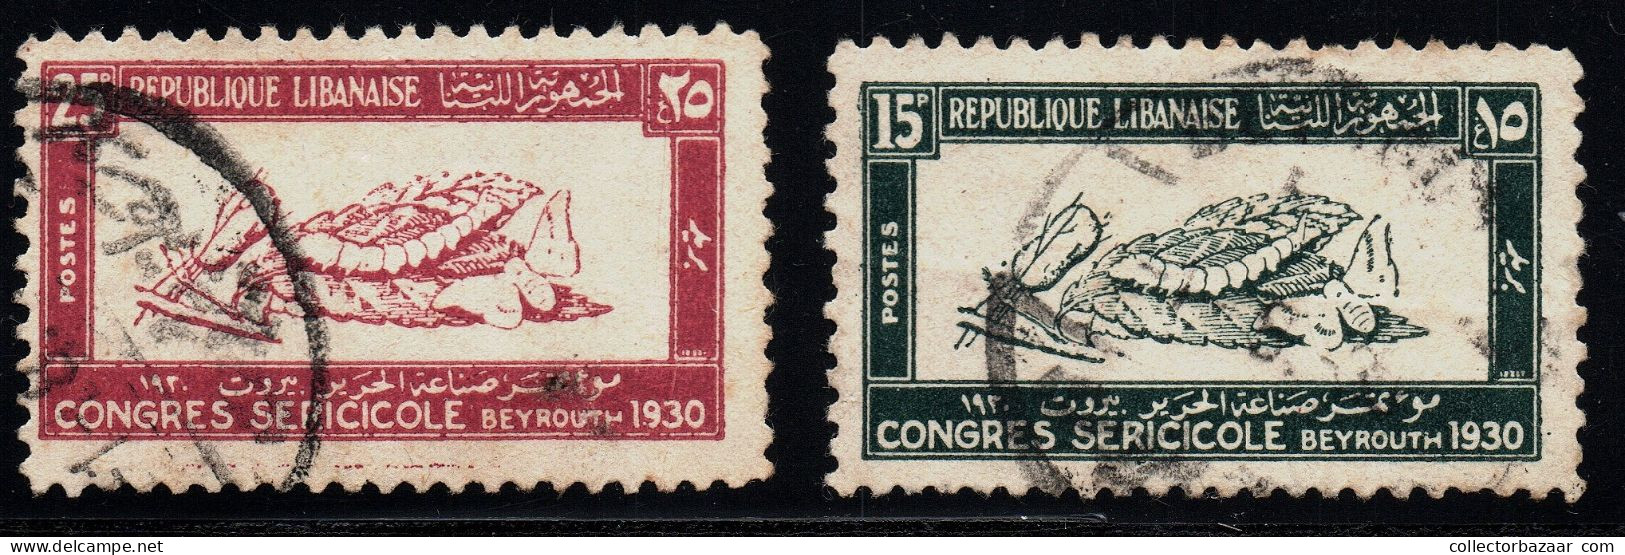 Liban Lebanon Silk Moth Michel 163-164 Used Scott 112 - 113 Very Nice Stamps Cv$25 - Libanon